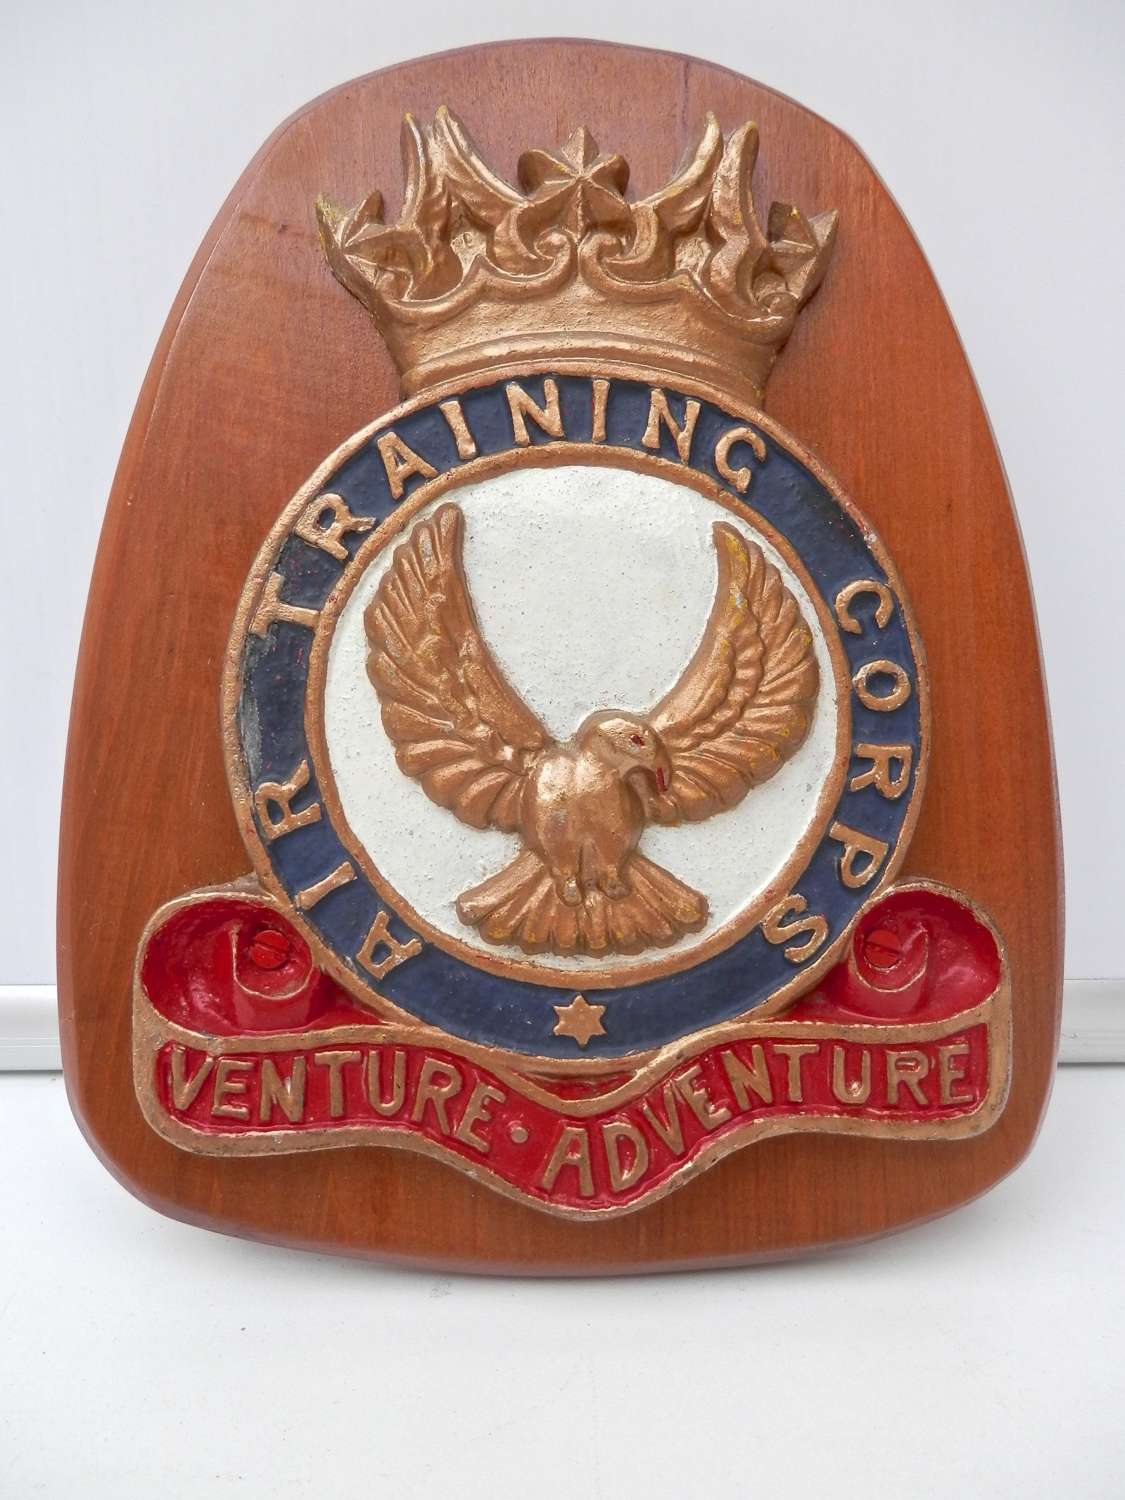 Air Training Corps vintage plaque